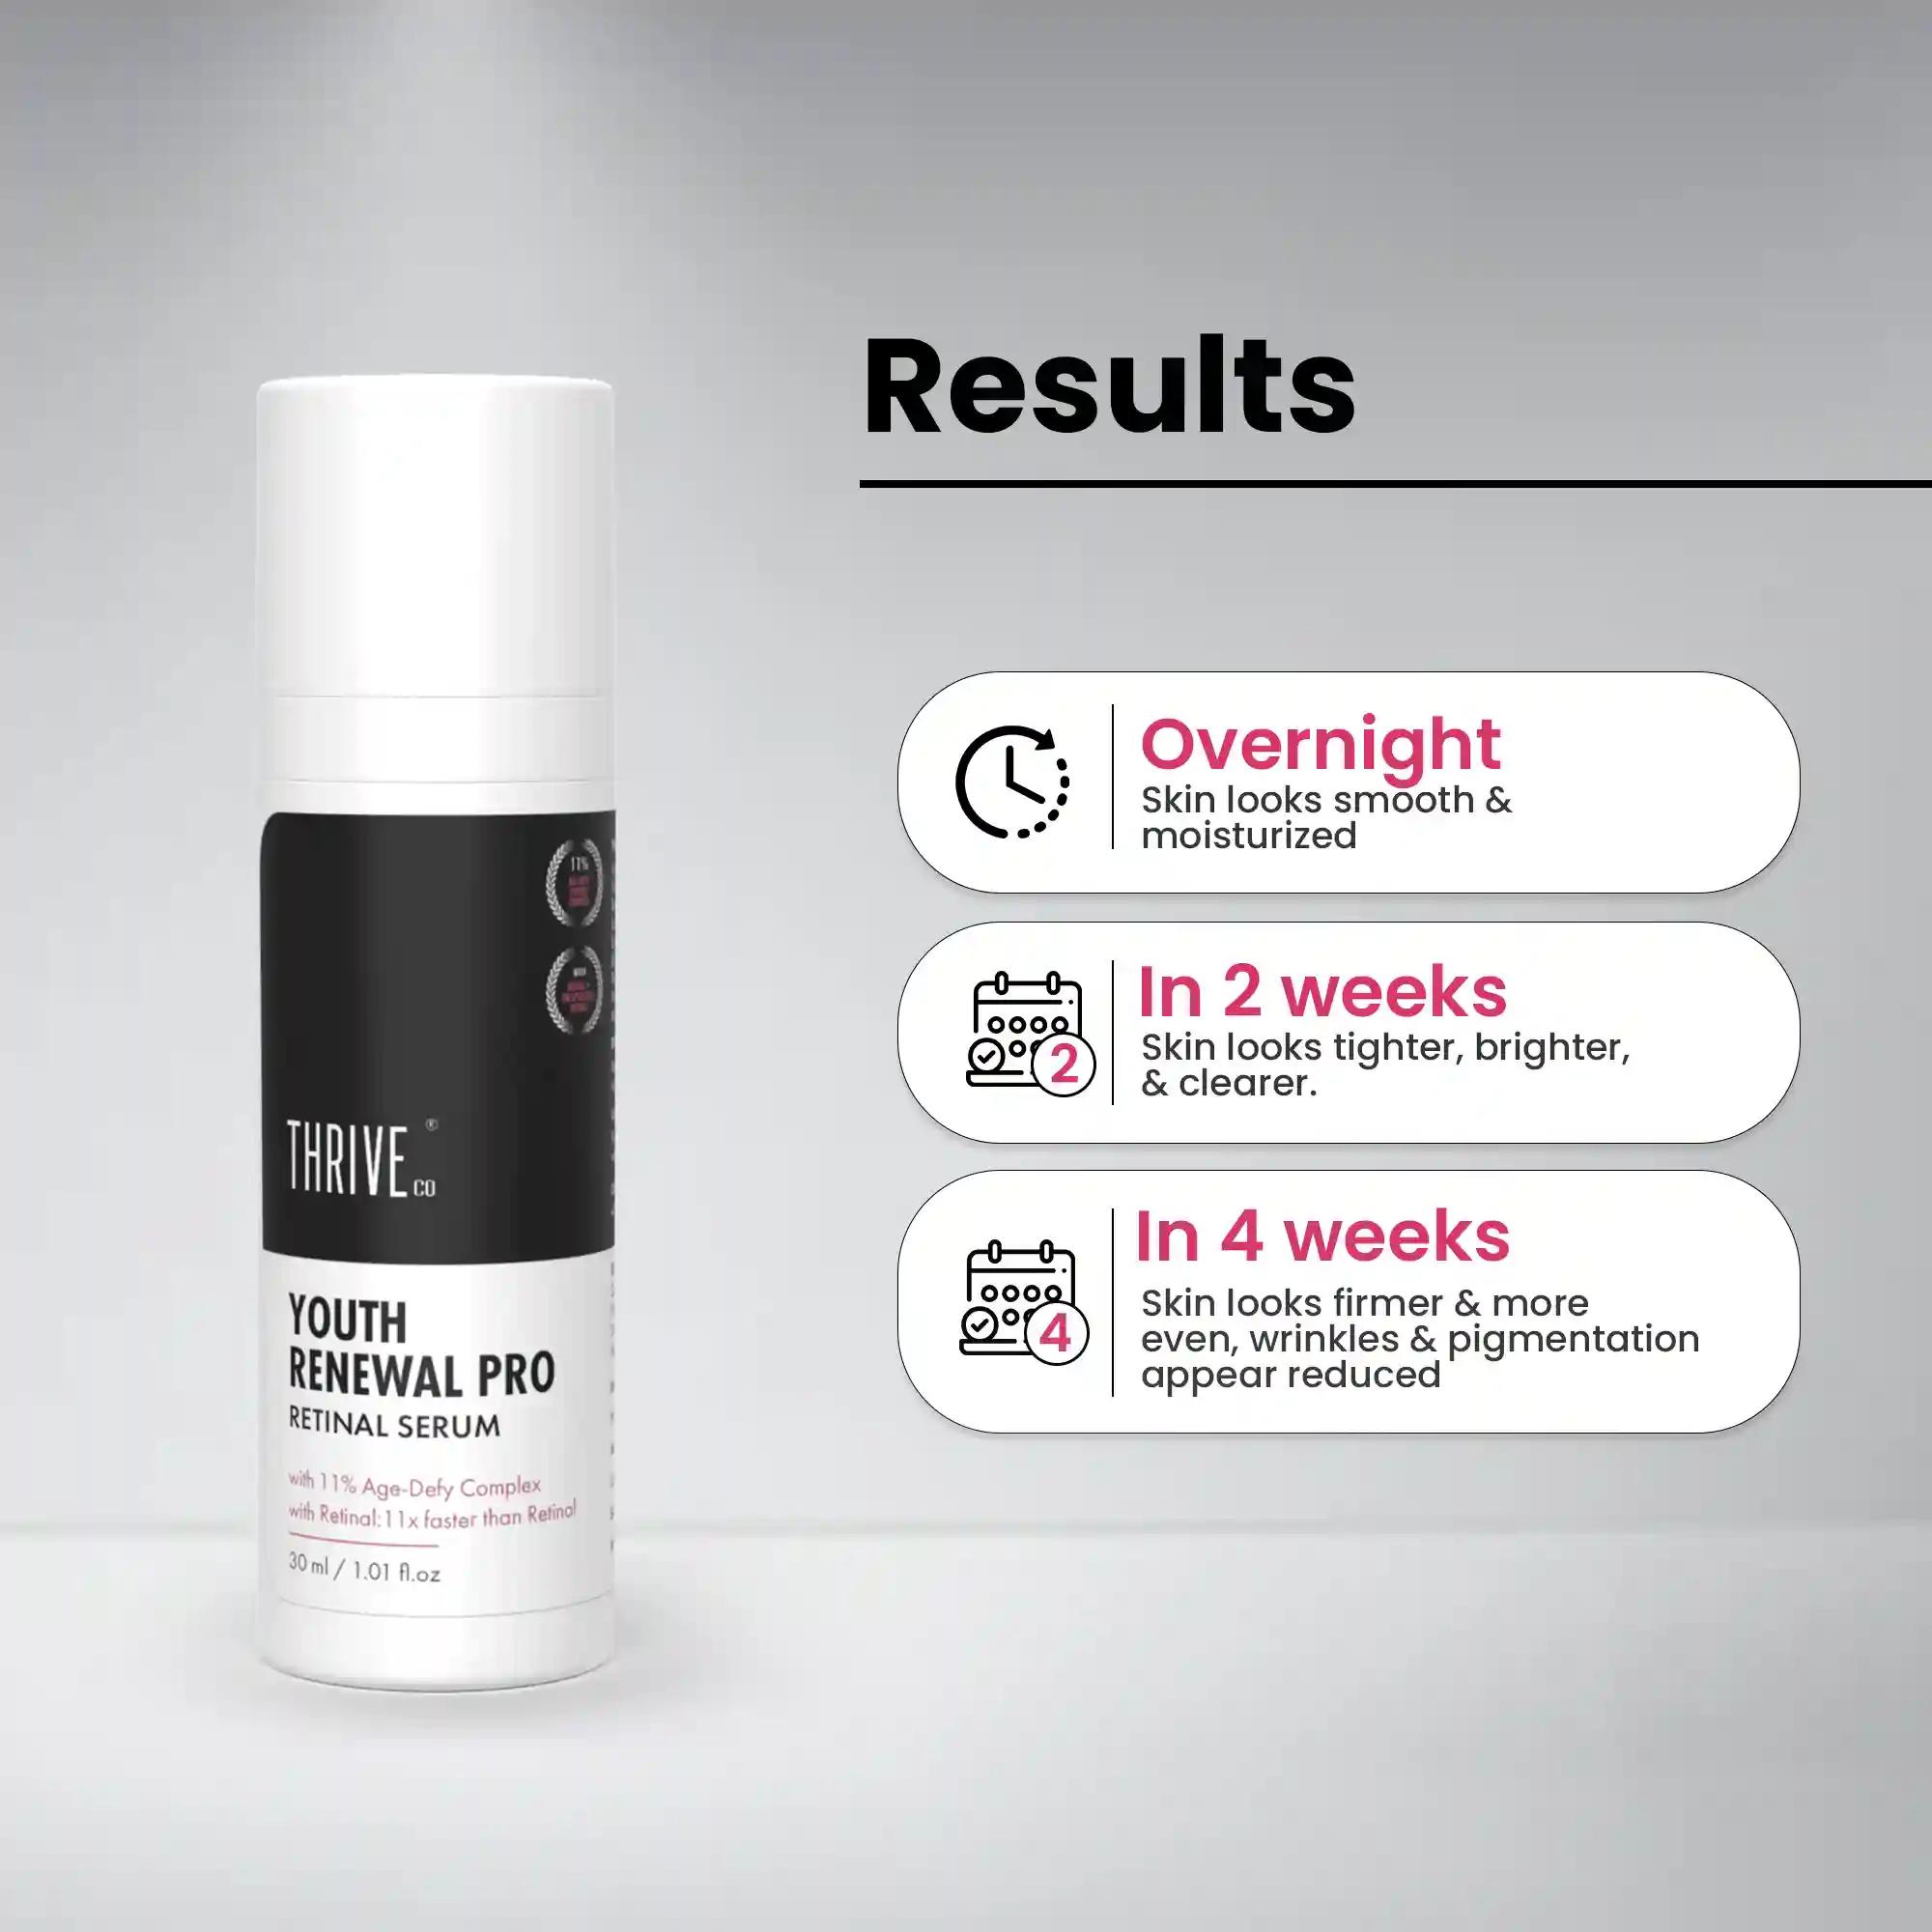 ThriveCo Youth Renewal Serum Pro For Anti-Ageing | Reduce Fine lines, Acne, Wrinkles | 30ml | Retinal serum: 11X Faster Than Your Retinol Serum | For Seasoned Retinol Users | Men & Women